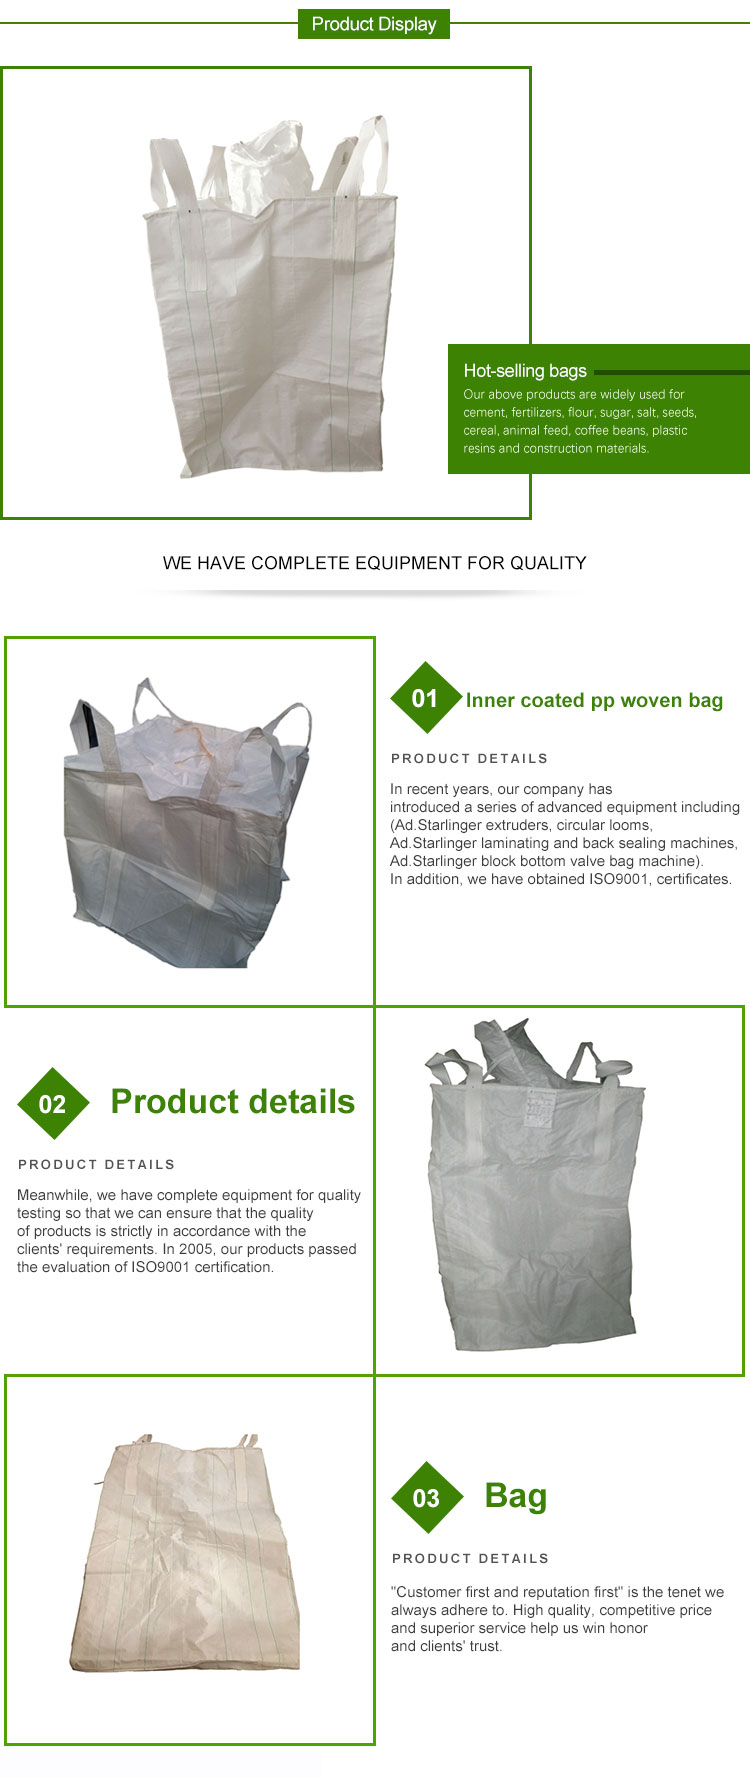 PP woven ton bulk  big  bags suppliers fibc jumbo storage bag